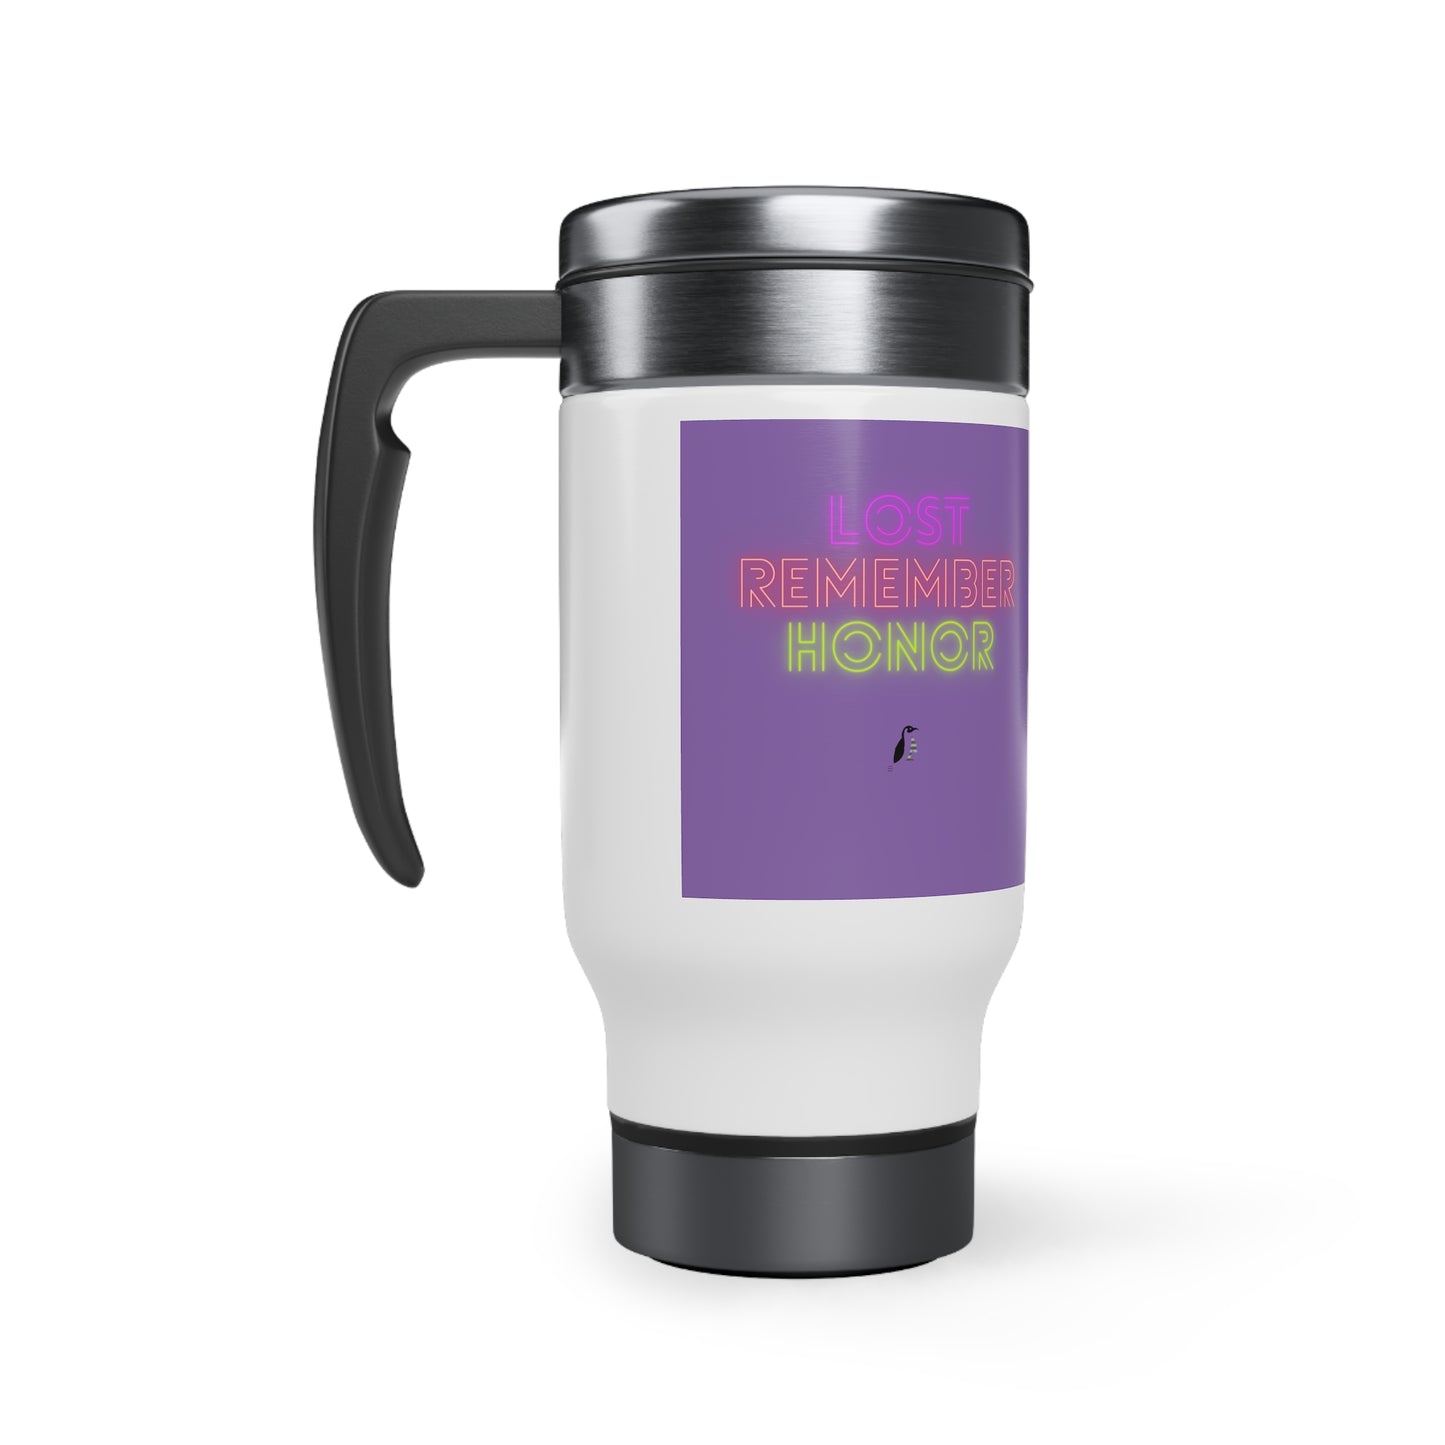 Stainless Steel Travel Mug with Handle, 14oz: Dance Lite Purple